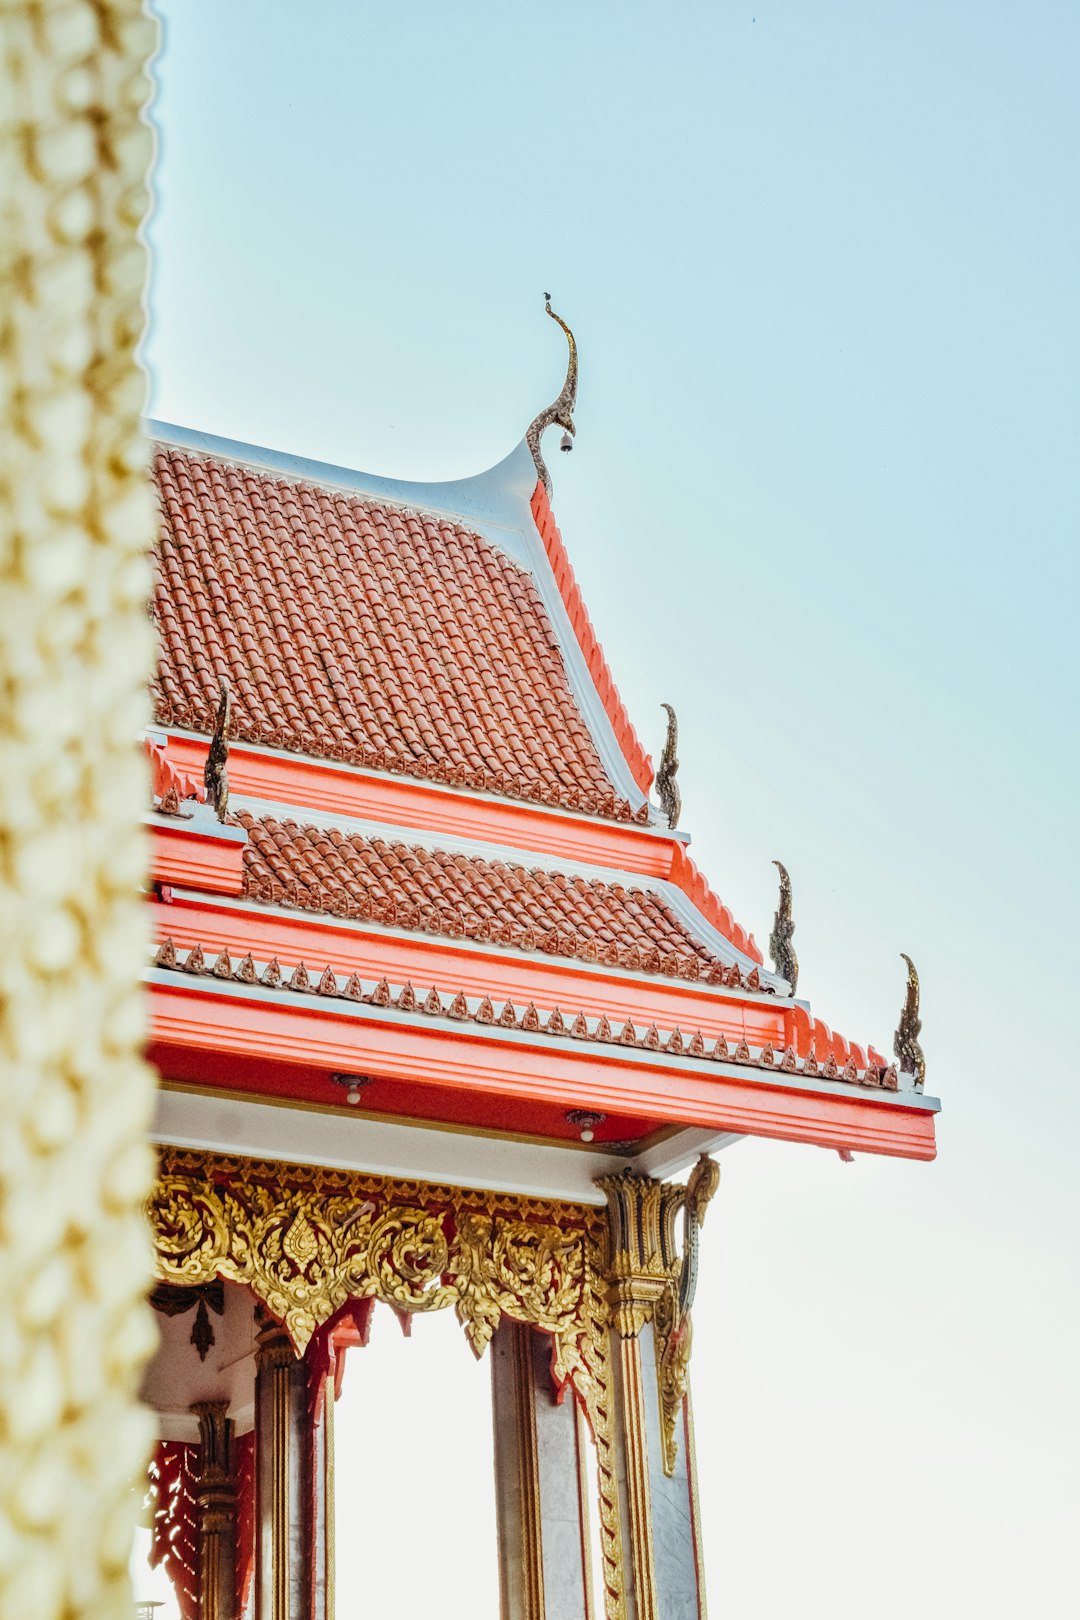 Temple photo spot Wat Chalong Temple Phuket